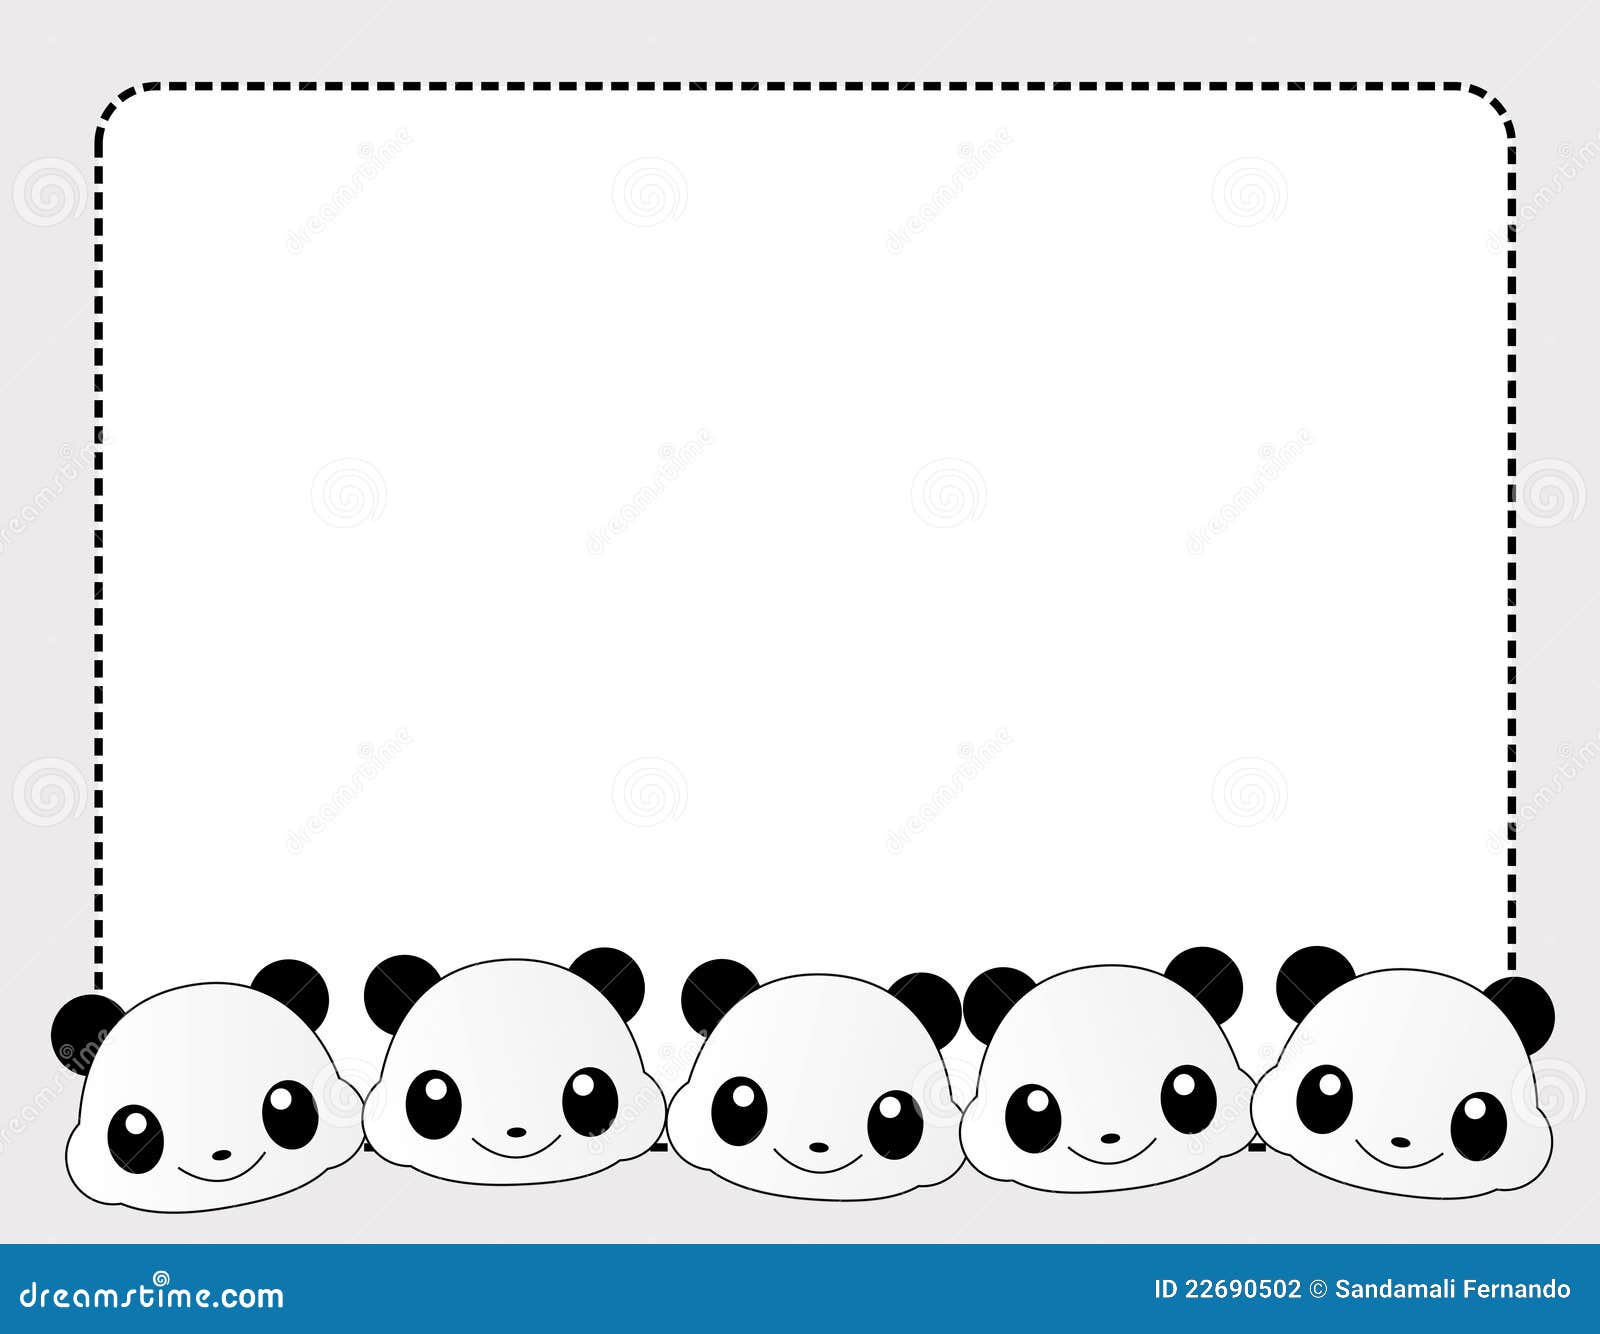 clipart panda borders - photo #5